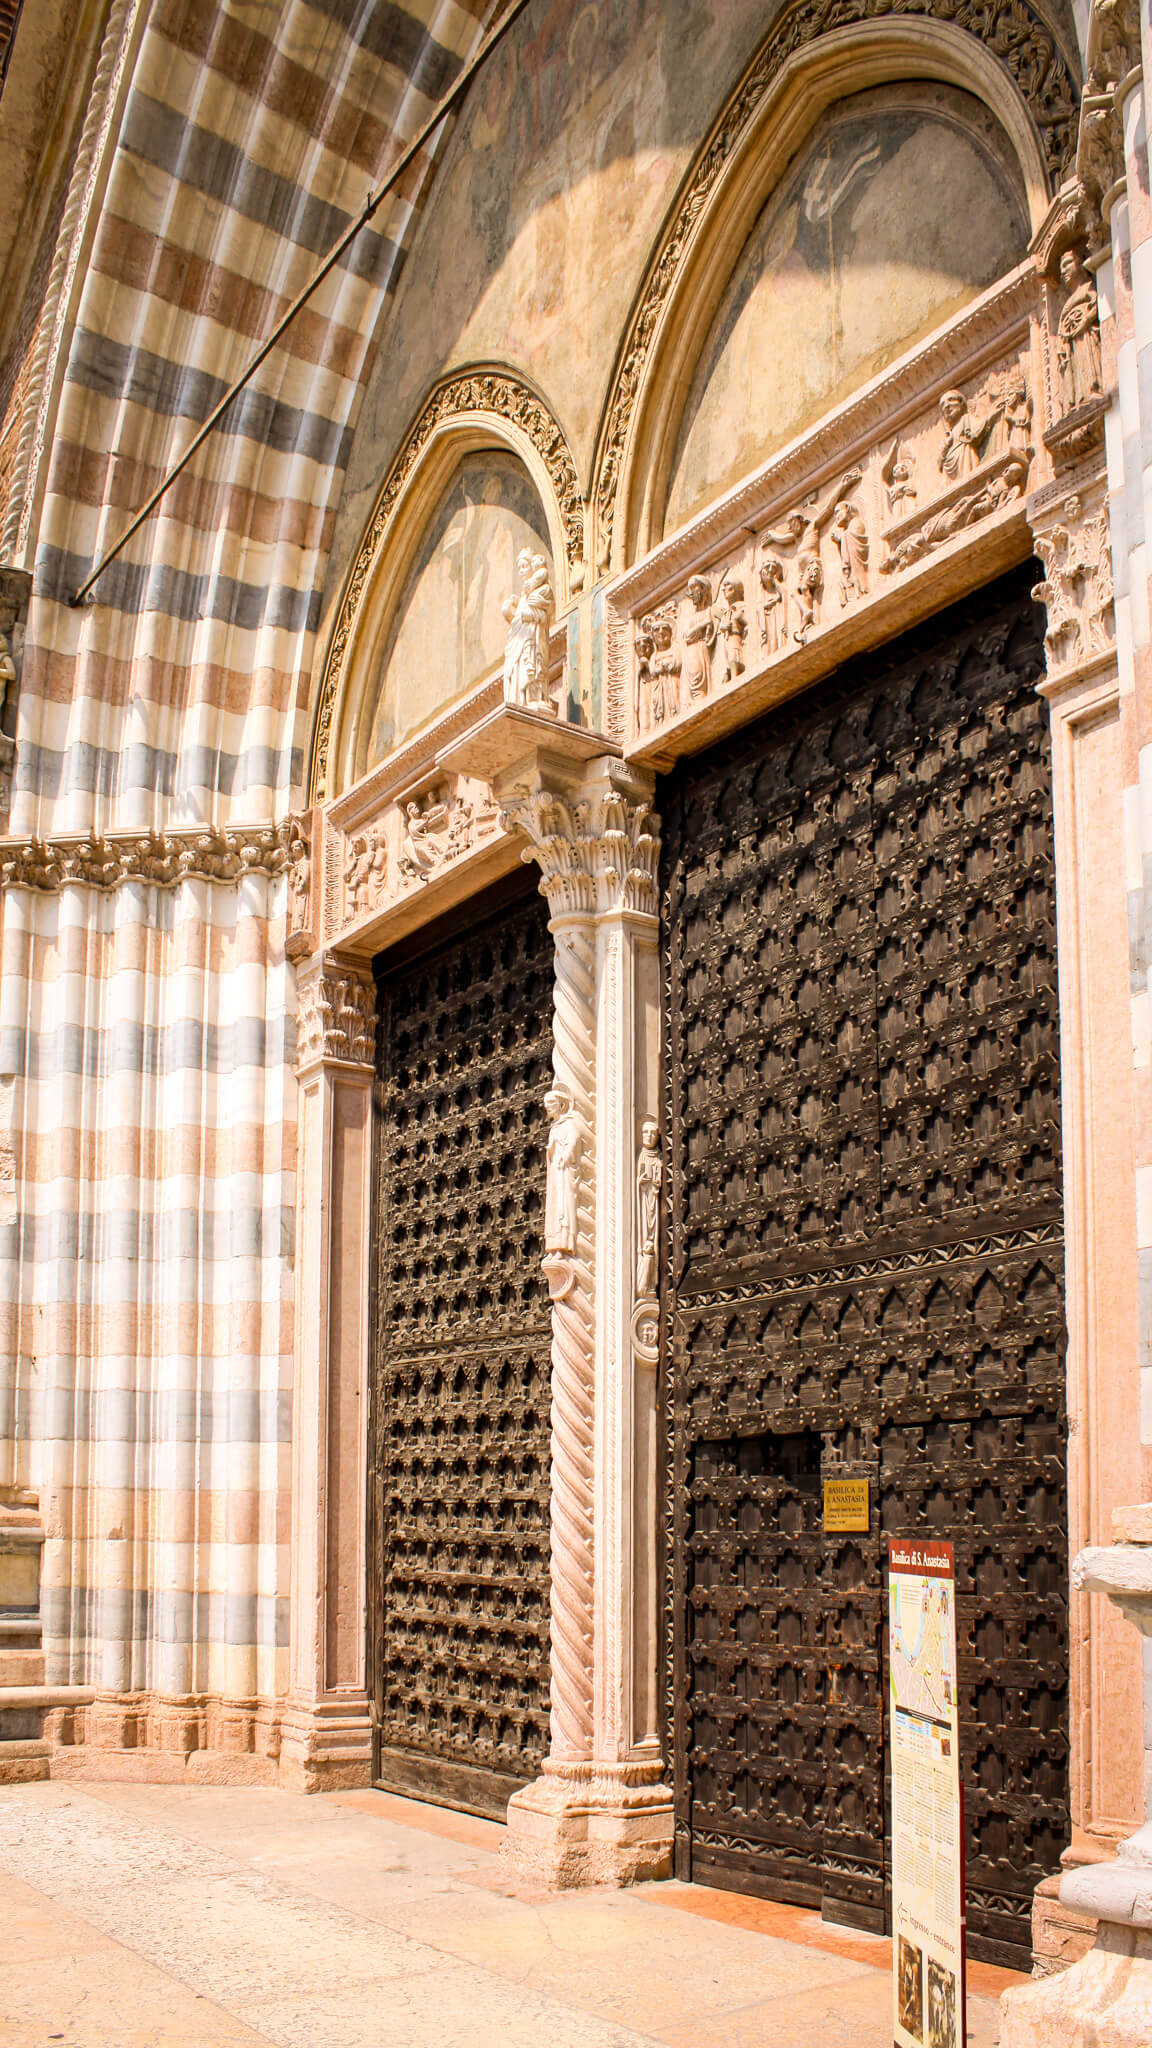 Impressive doors of the Basilica di Santa Anastasia in Verona